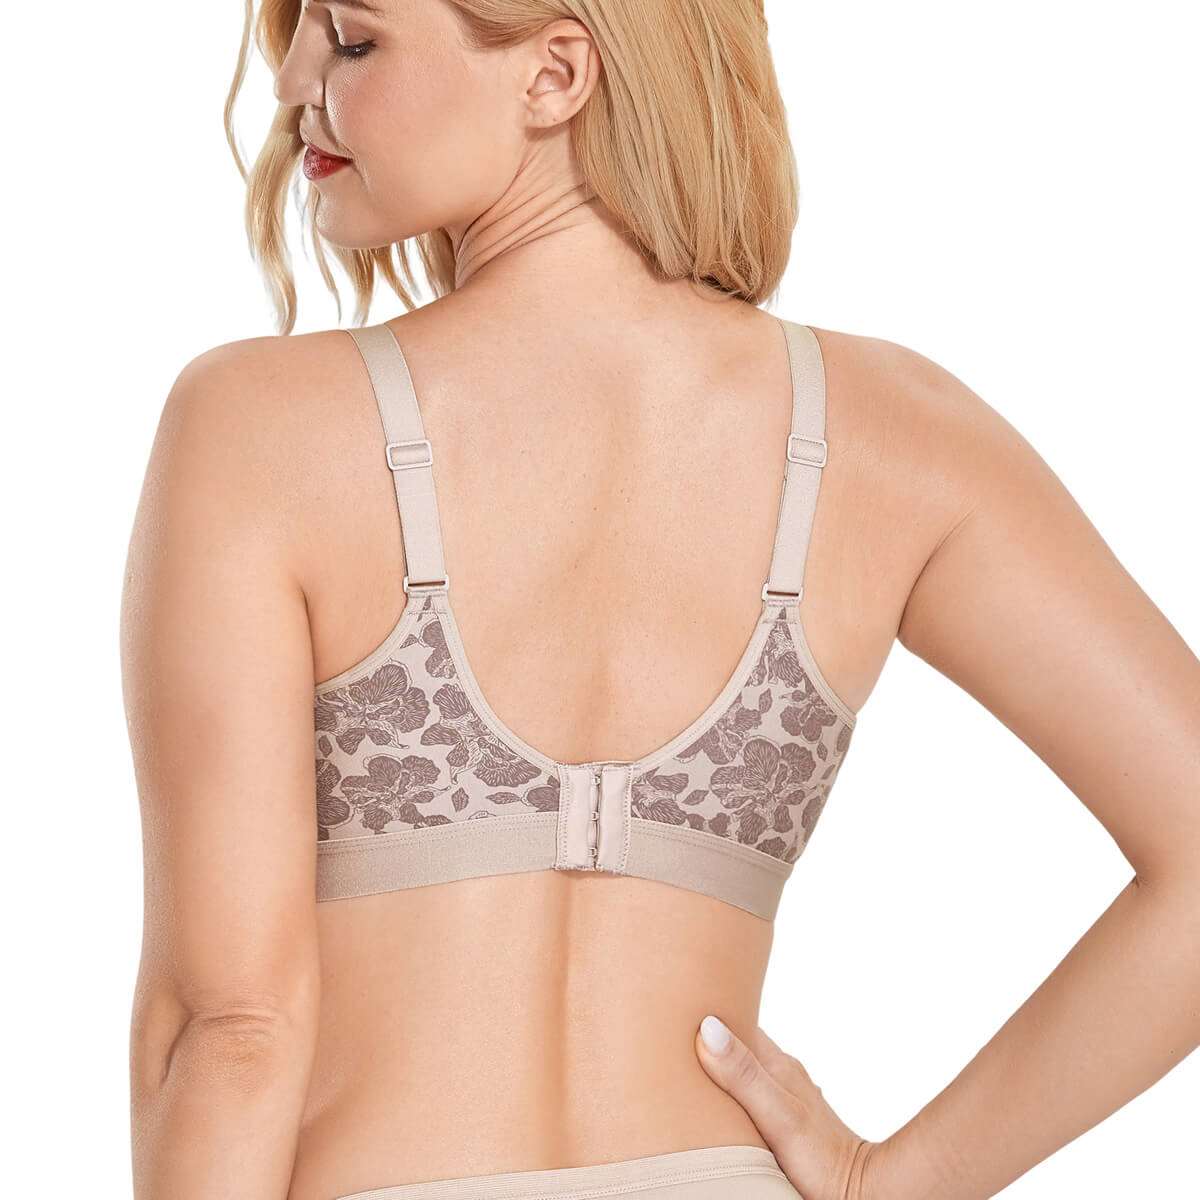 Women's Bra Wirefree Cotton Bra, Sleeping Underwear Soft Cup Plus Size Bra  Full Coverage Bralette (Color : Gray, Size : 46D)